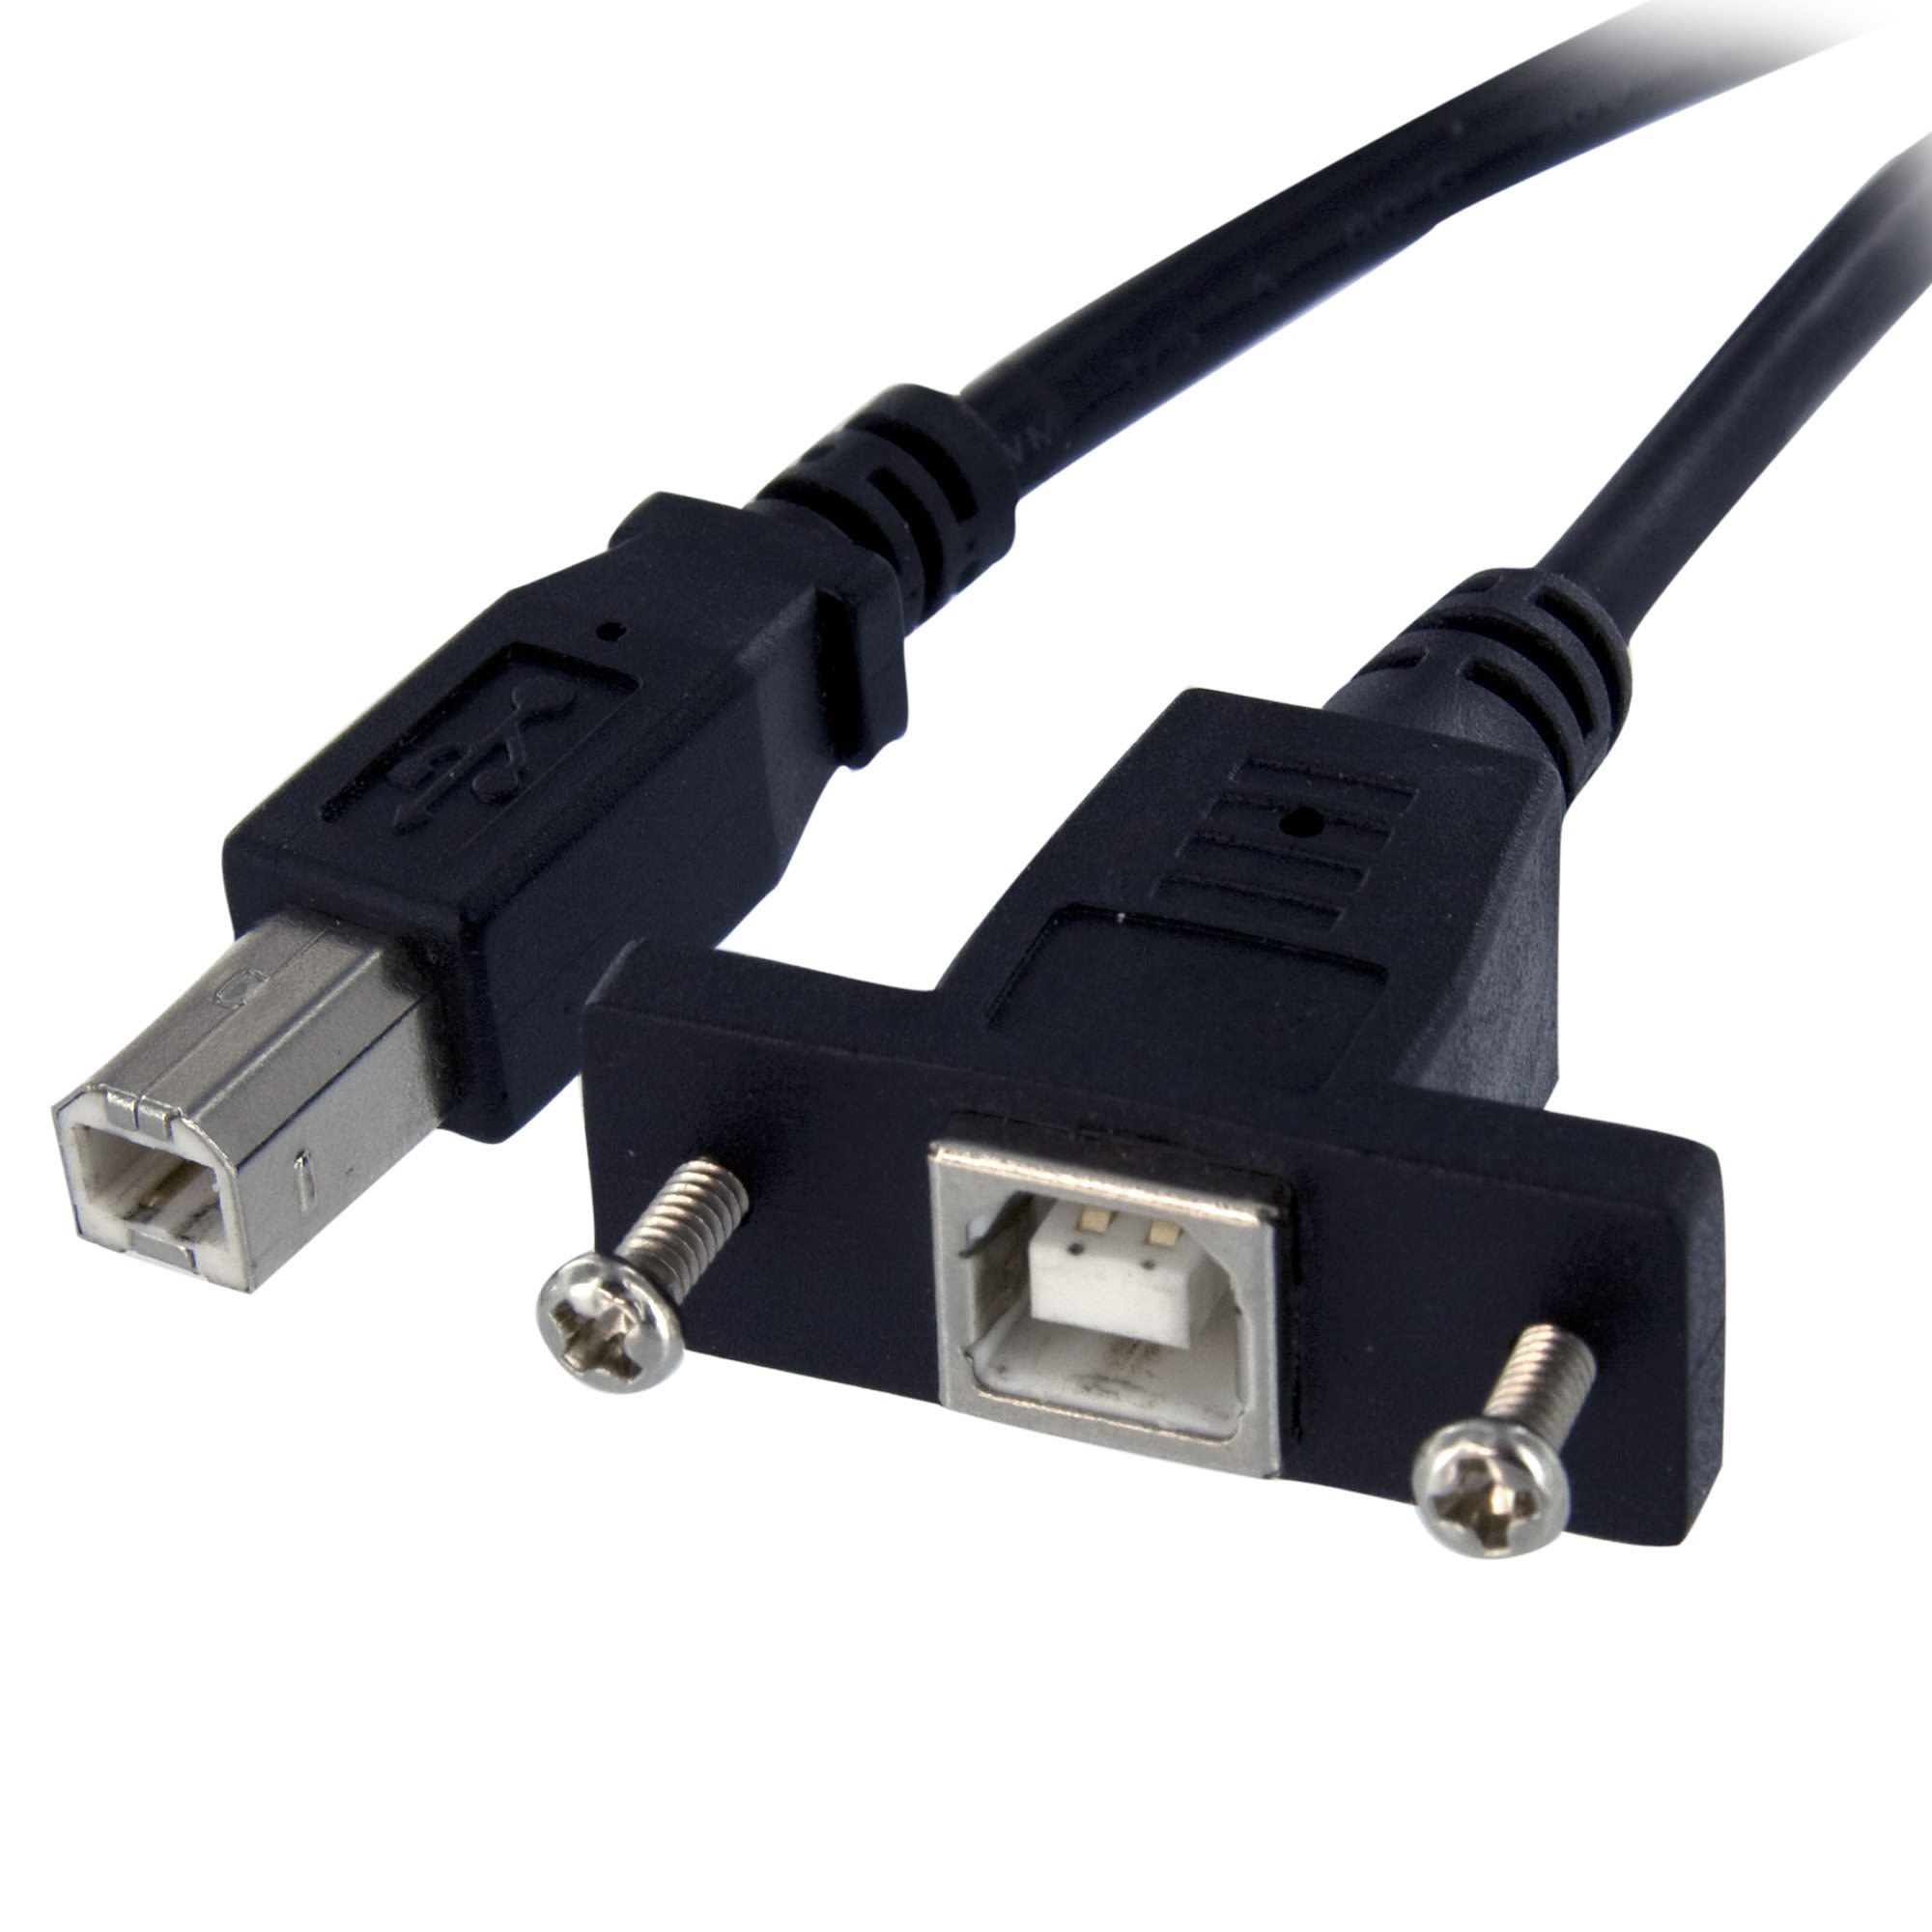 Cable USB 2.0 Startech, con A. USB B Macho, con B. USB B Hembra, long. 900mm, color Negro